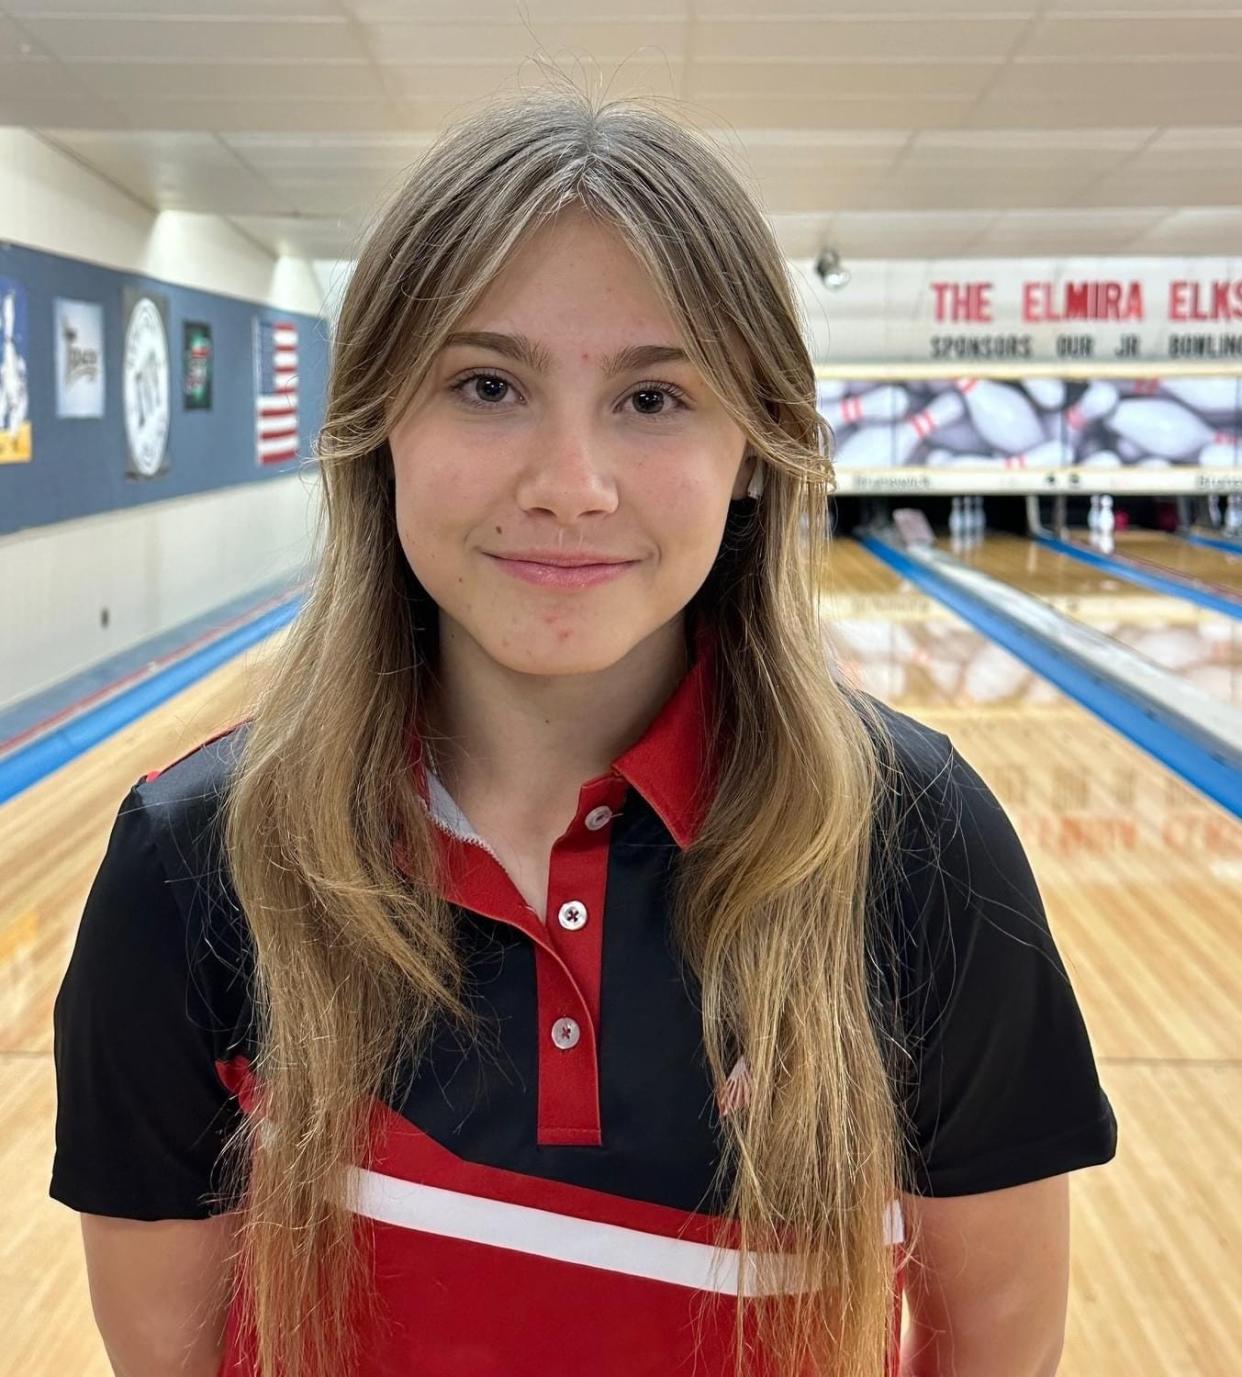 Madison Smith of the Elmira girls bowling team.